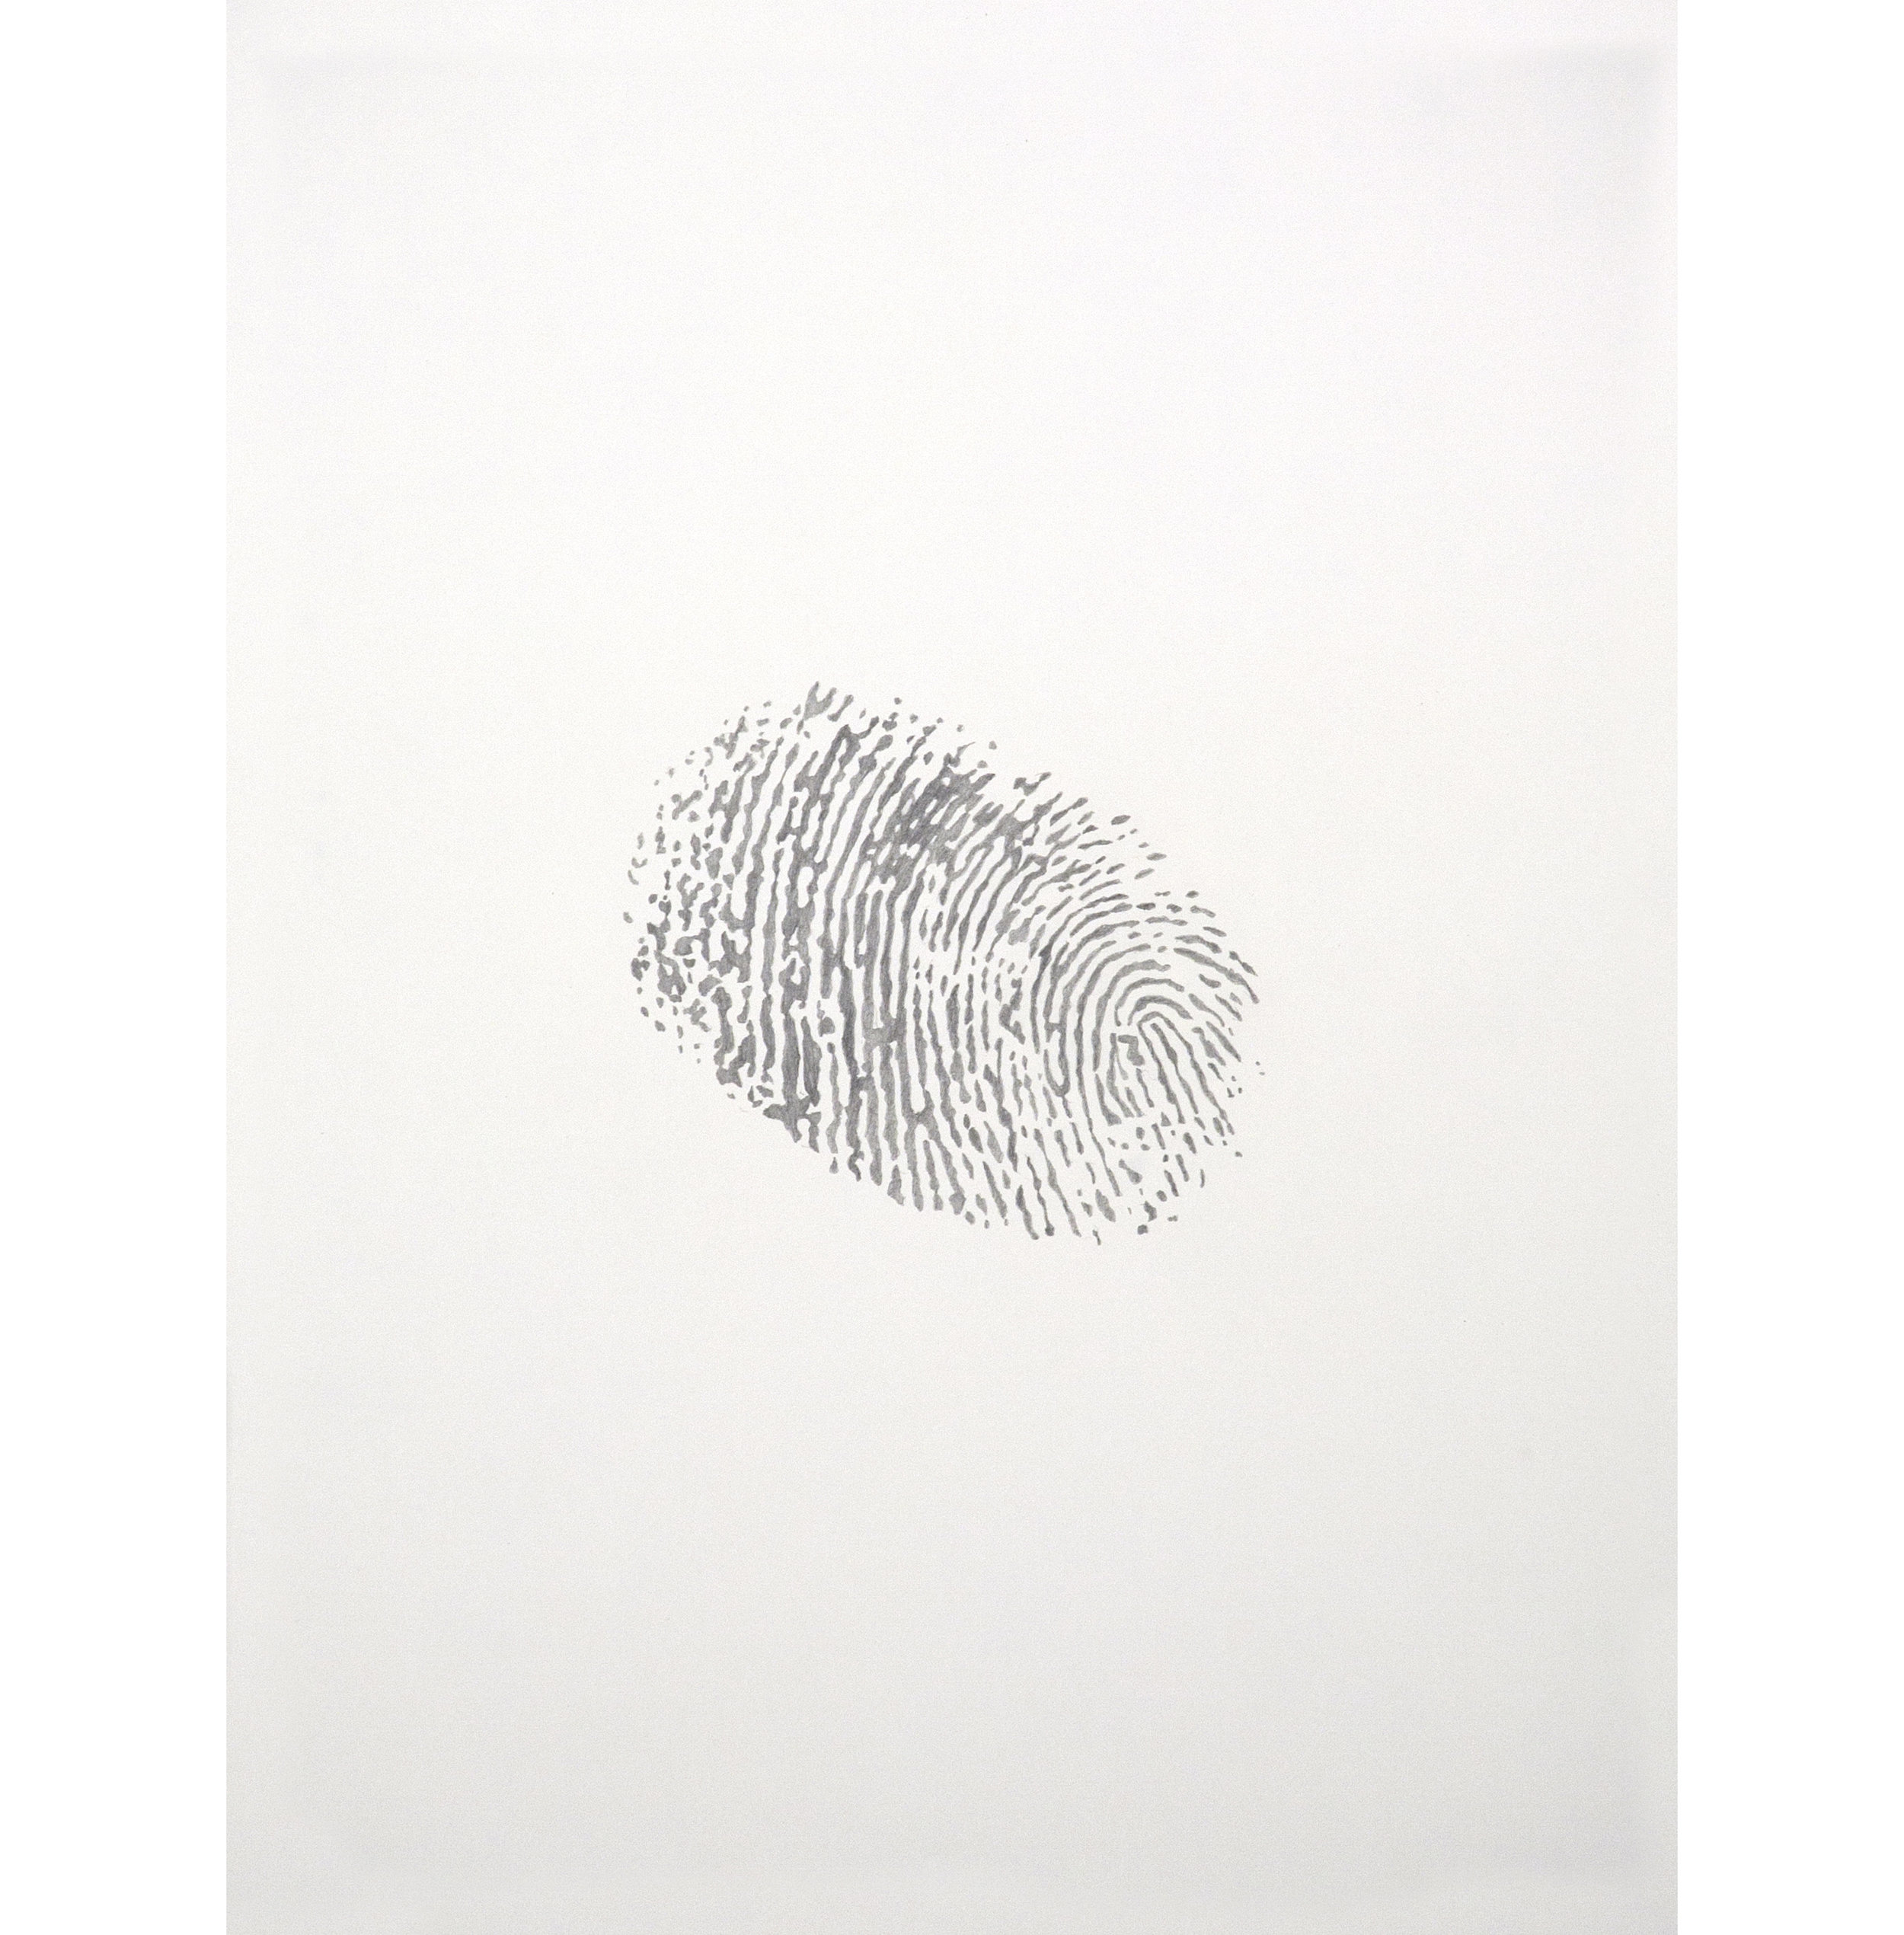 Lexicon 11, 2013, graphite on paper, 24” x 18”